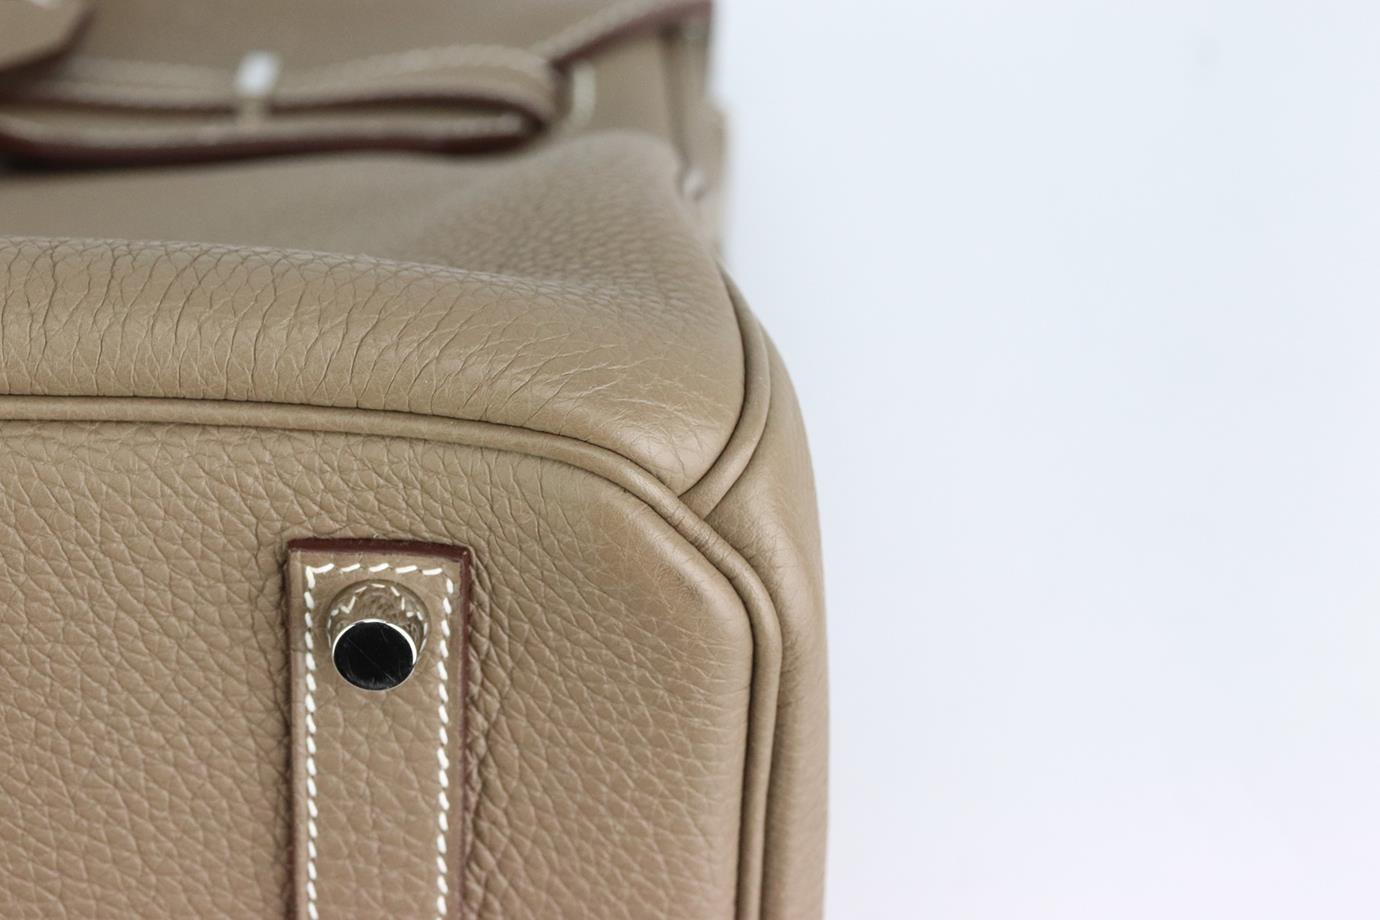 Hermès 2011 Birkin 35cm Togo Leather Bag For Sale 2